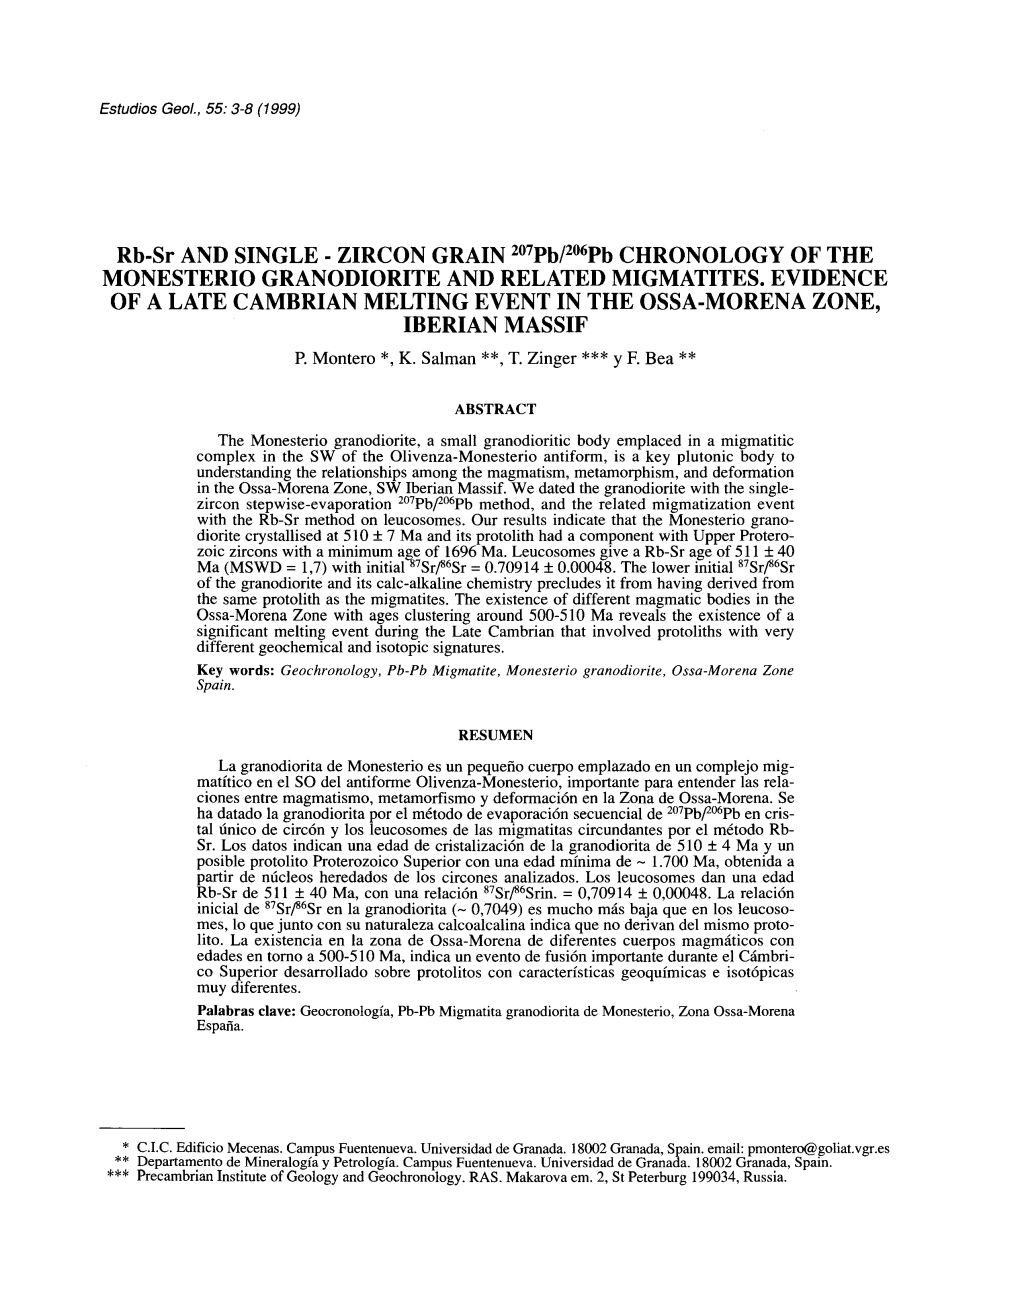 Rb-Sr and SINGLE - ZIRCON GRAIN 207Pbf206pb CHRONOLOGY of the MONESTERIO GRANODIORITE and RELATED MIGMATITES